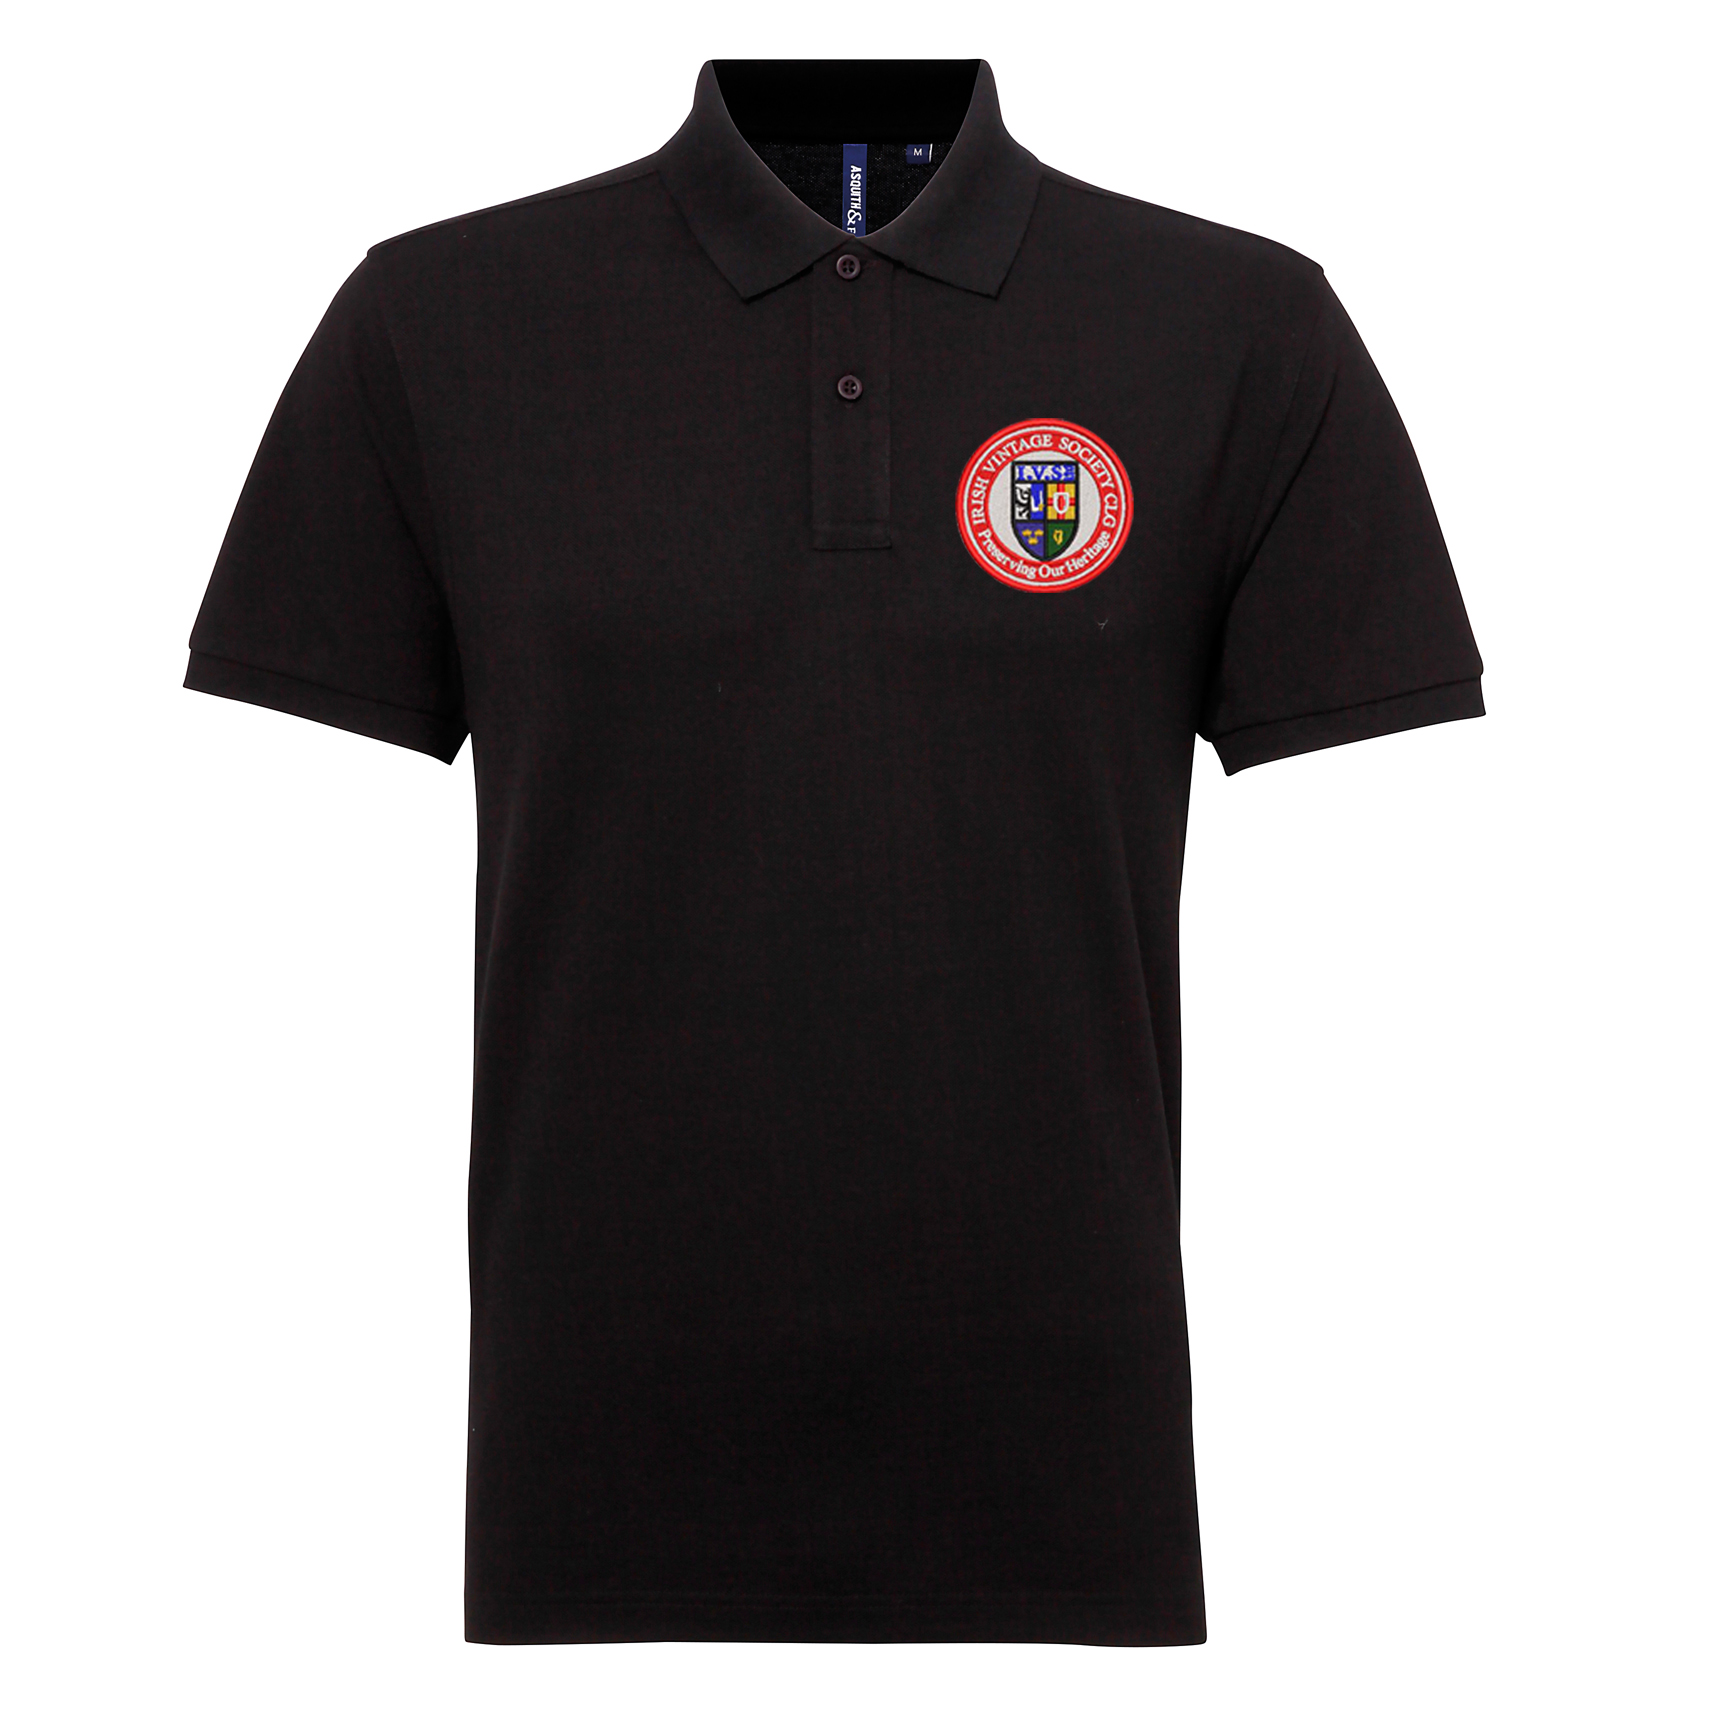 Adults Polo shirt with logo – Black | Irish Vintage Society